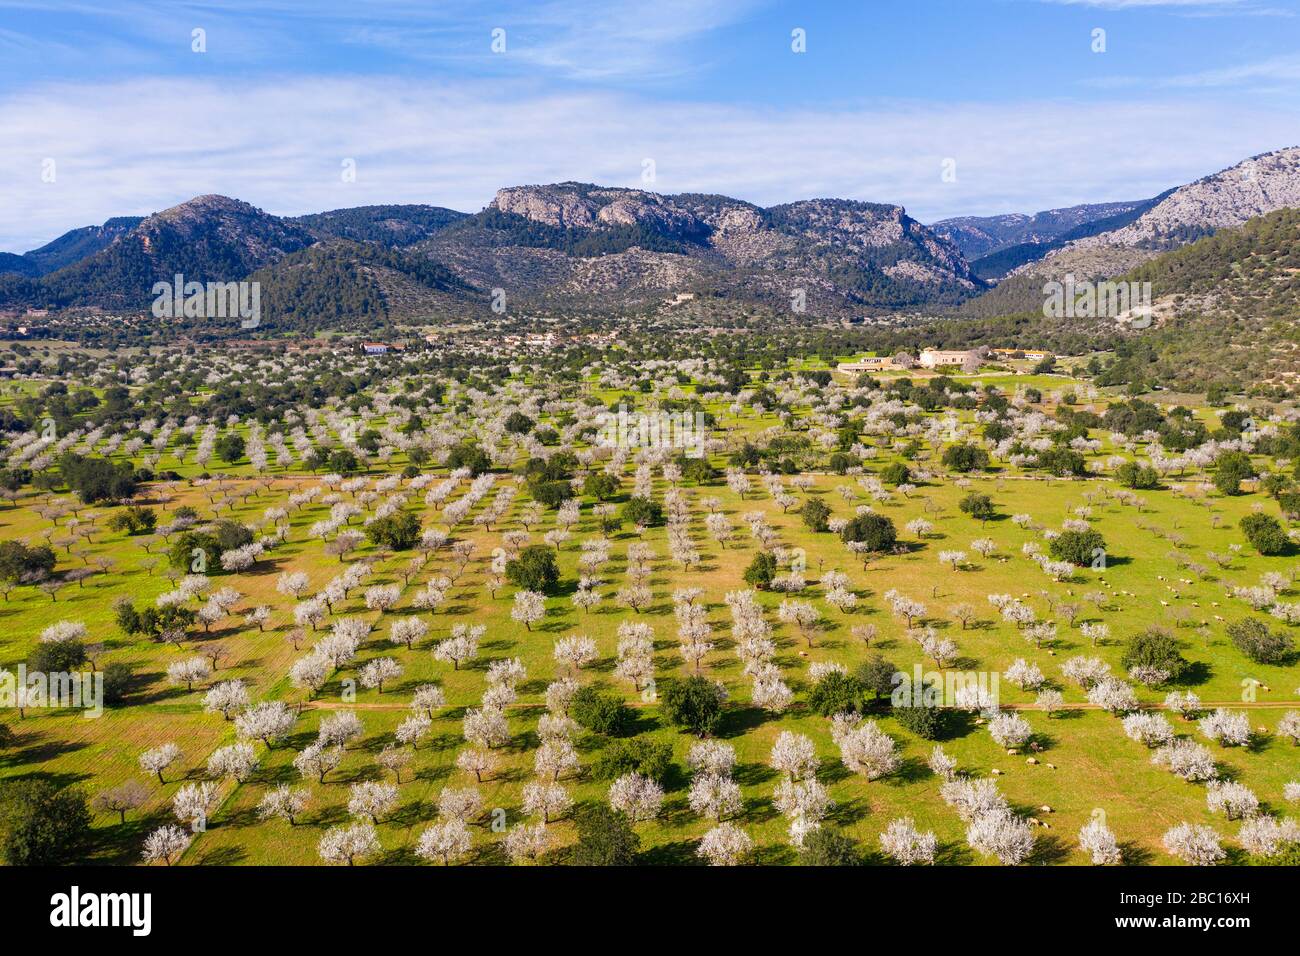 Mandelblüte, blühende Mandelbäume, Mandelplantage bei Bunyola, Serra de Tramuntana, Luftbild, Mallorca, Balearen, Spanien Foto Stock